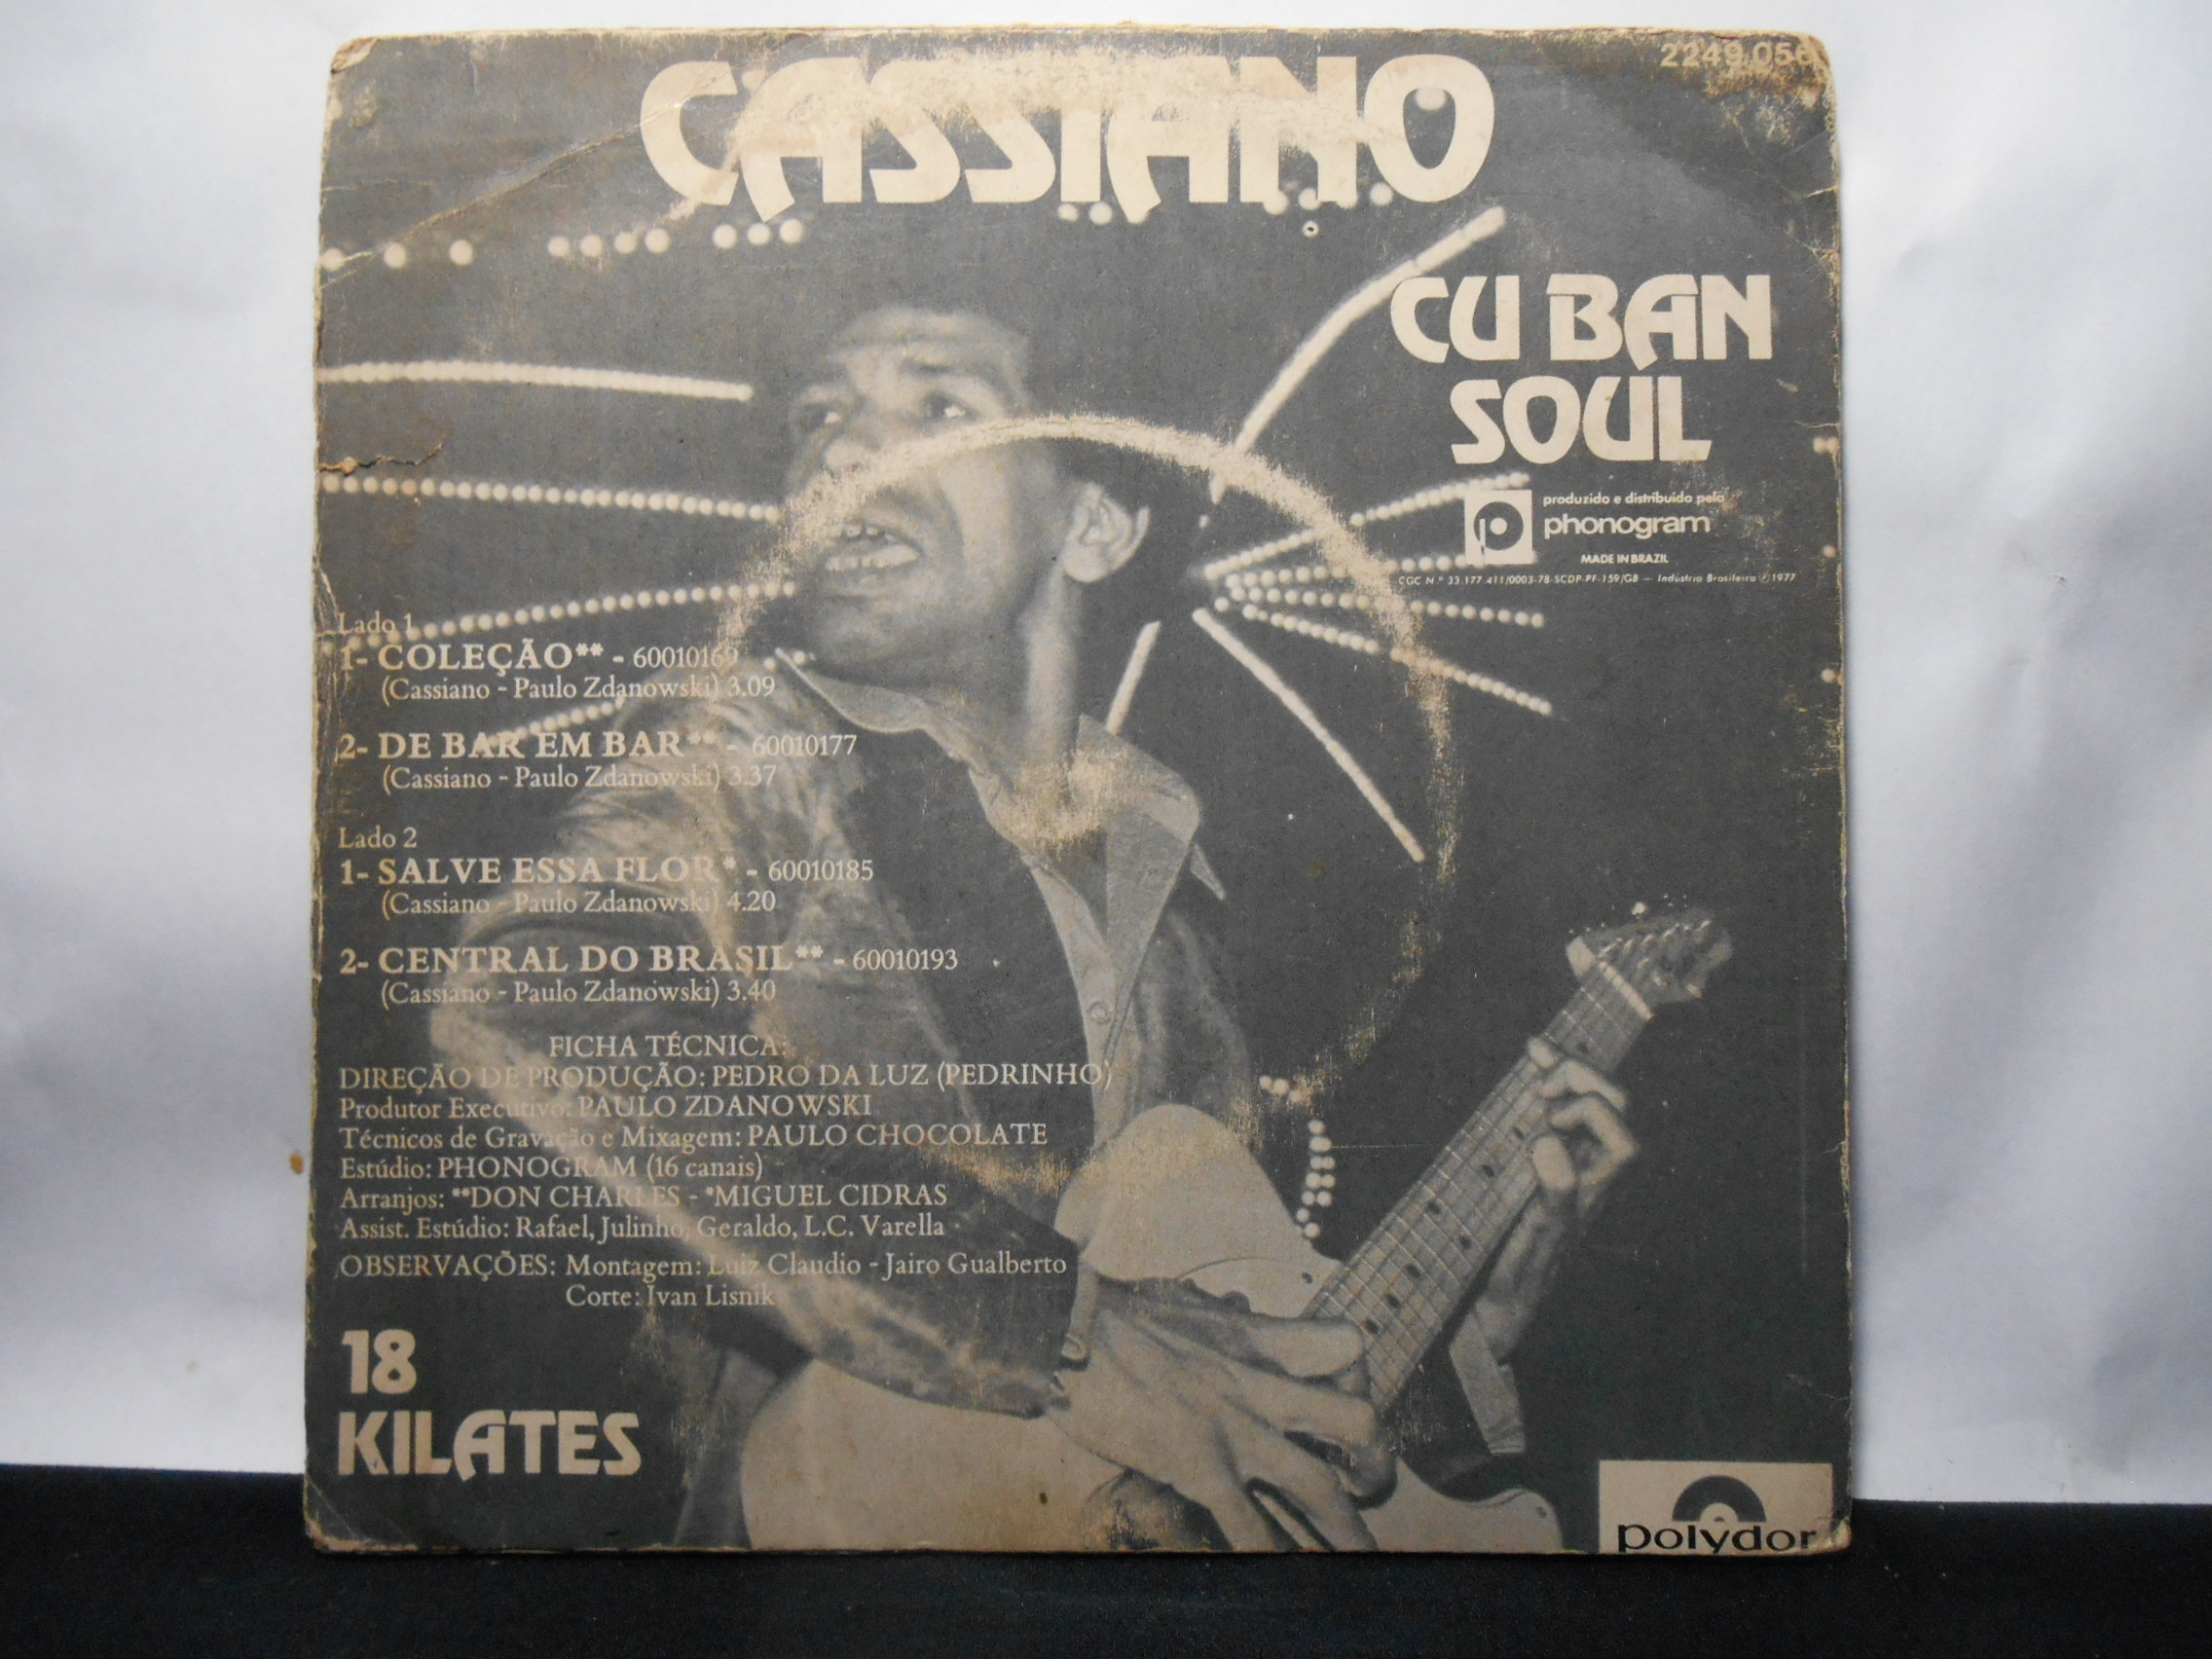 Vinil Compacto - Cassiano - Cuban Soul 18 Kilates